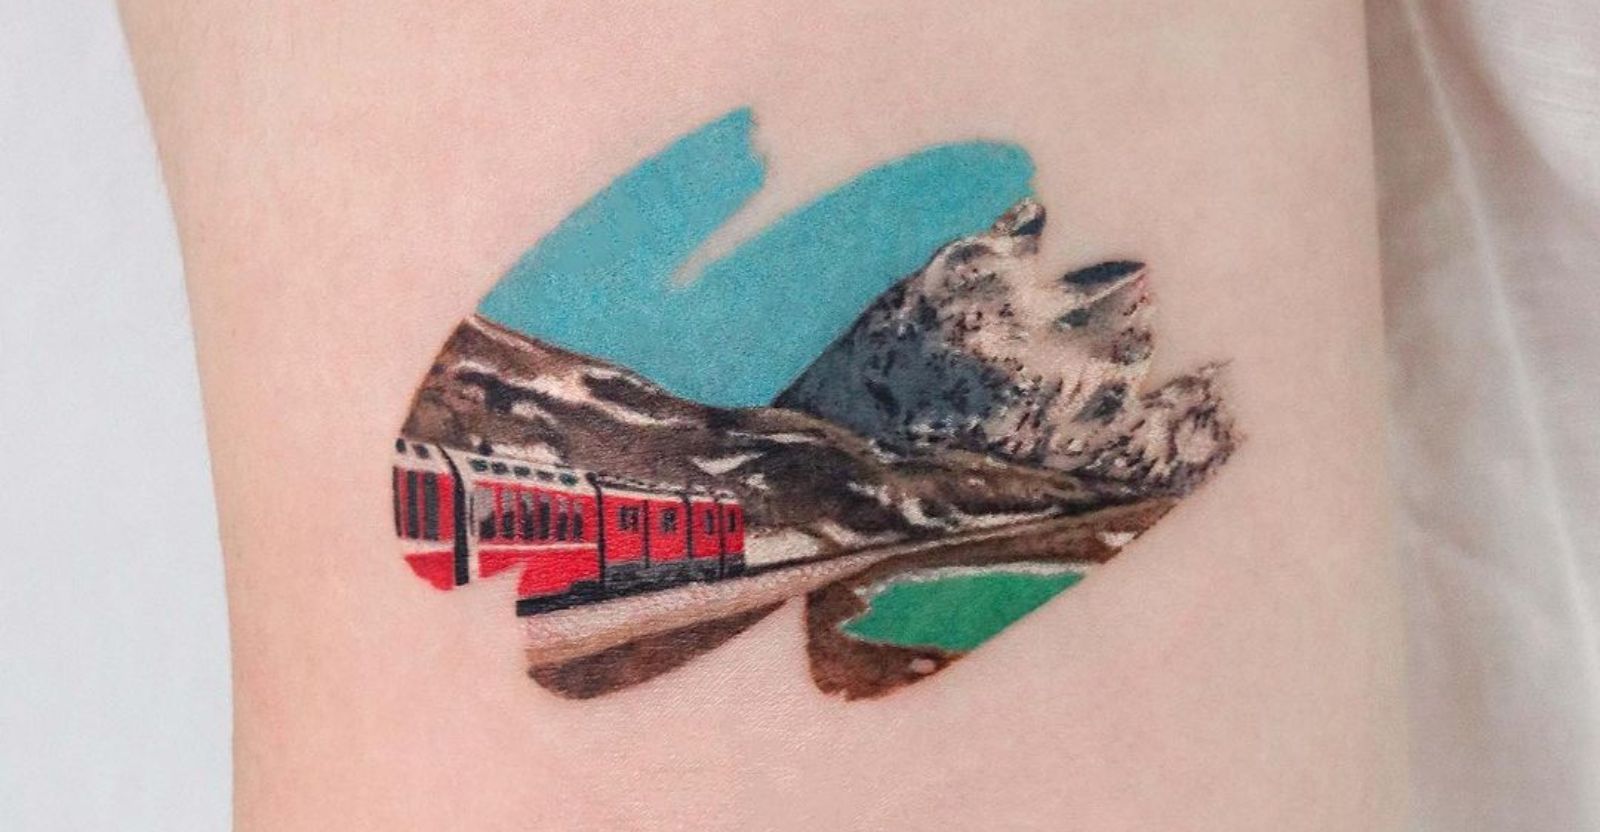 My Blood Mountain tattoo! More Info / Pics inside post. : r/mastodonband